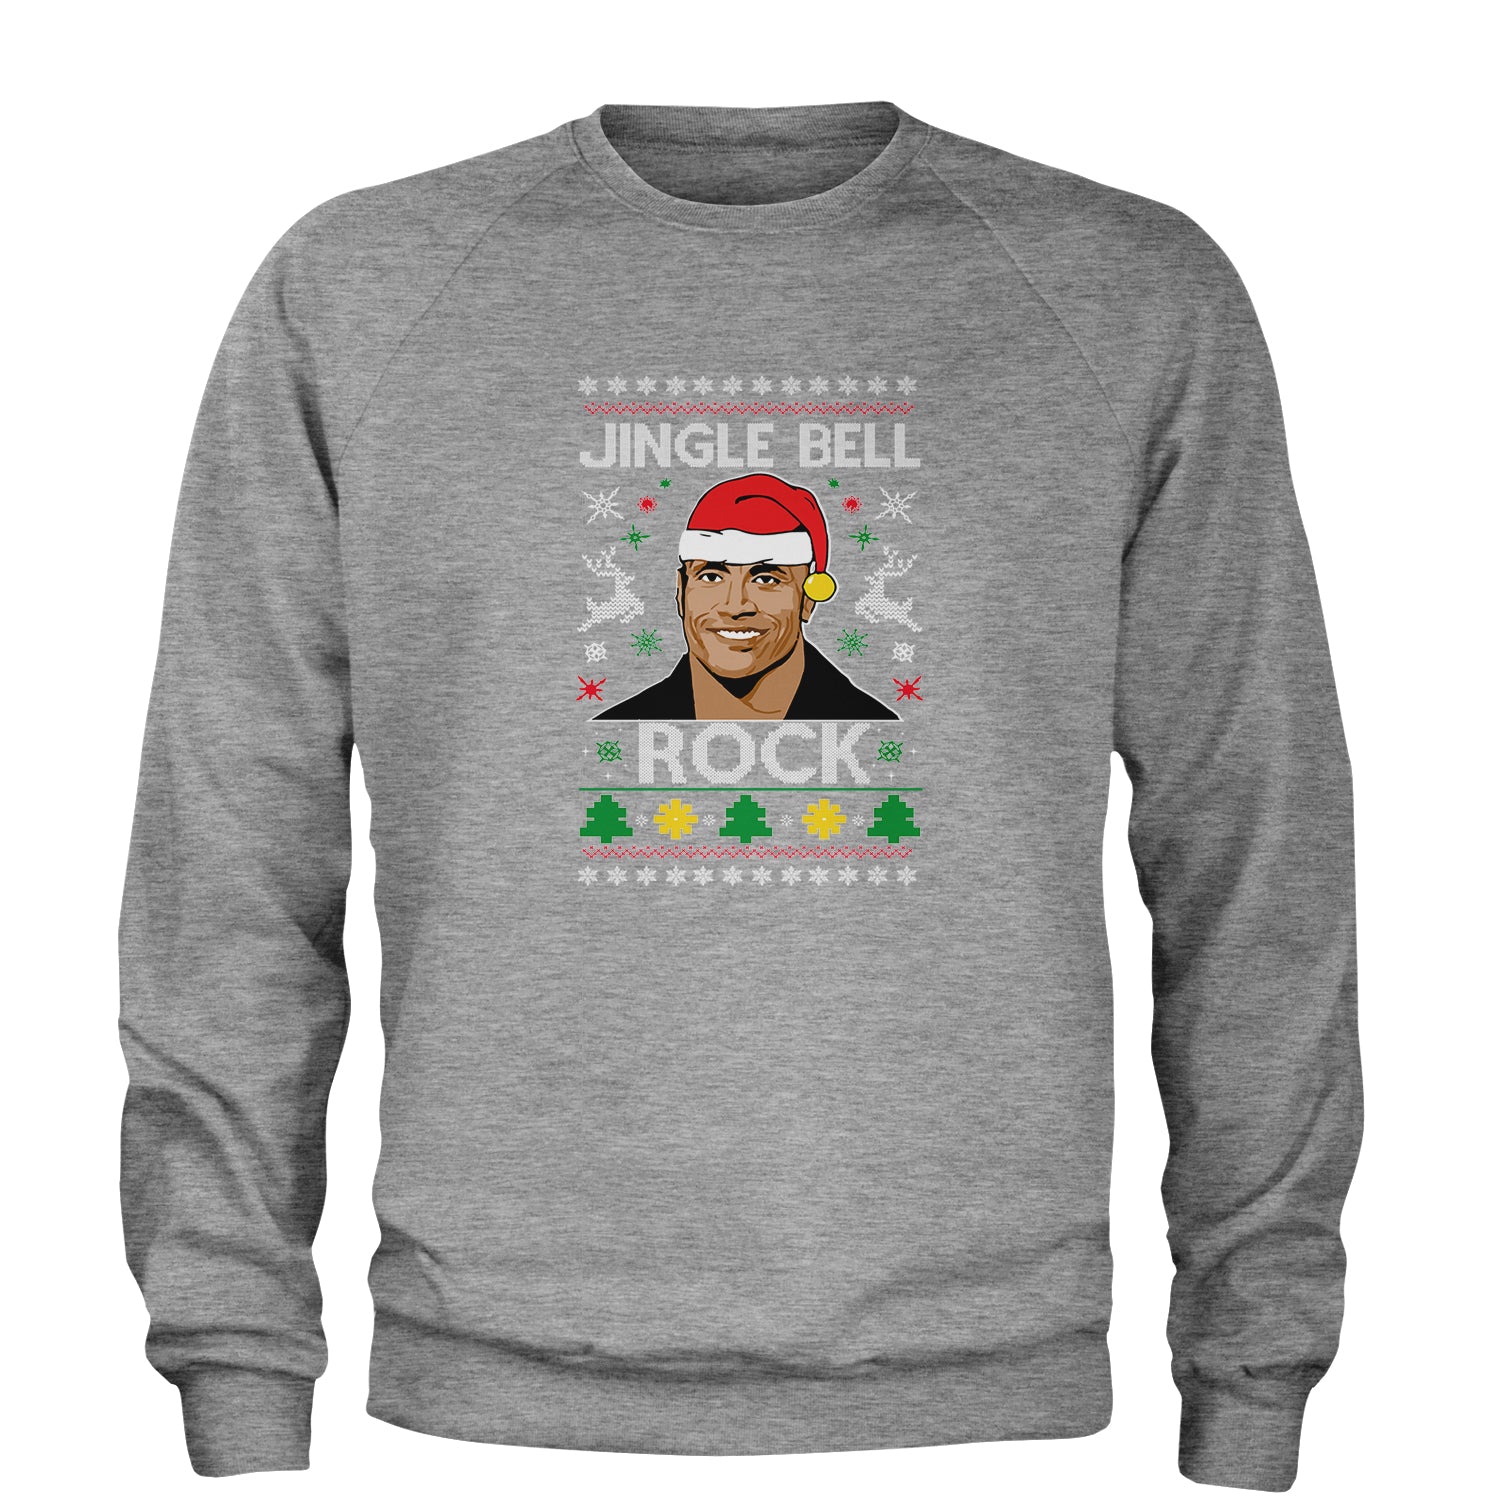 Jingle Bell Rock Ugly Christmas Adult Crewneck Sweatshirt 2018, champ, Christmas, dwayne, johnson, peoples, rock, Sweatshirts, the, Ugly by Expression Tees